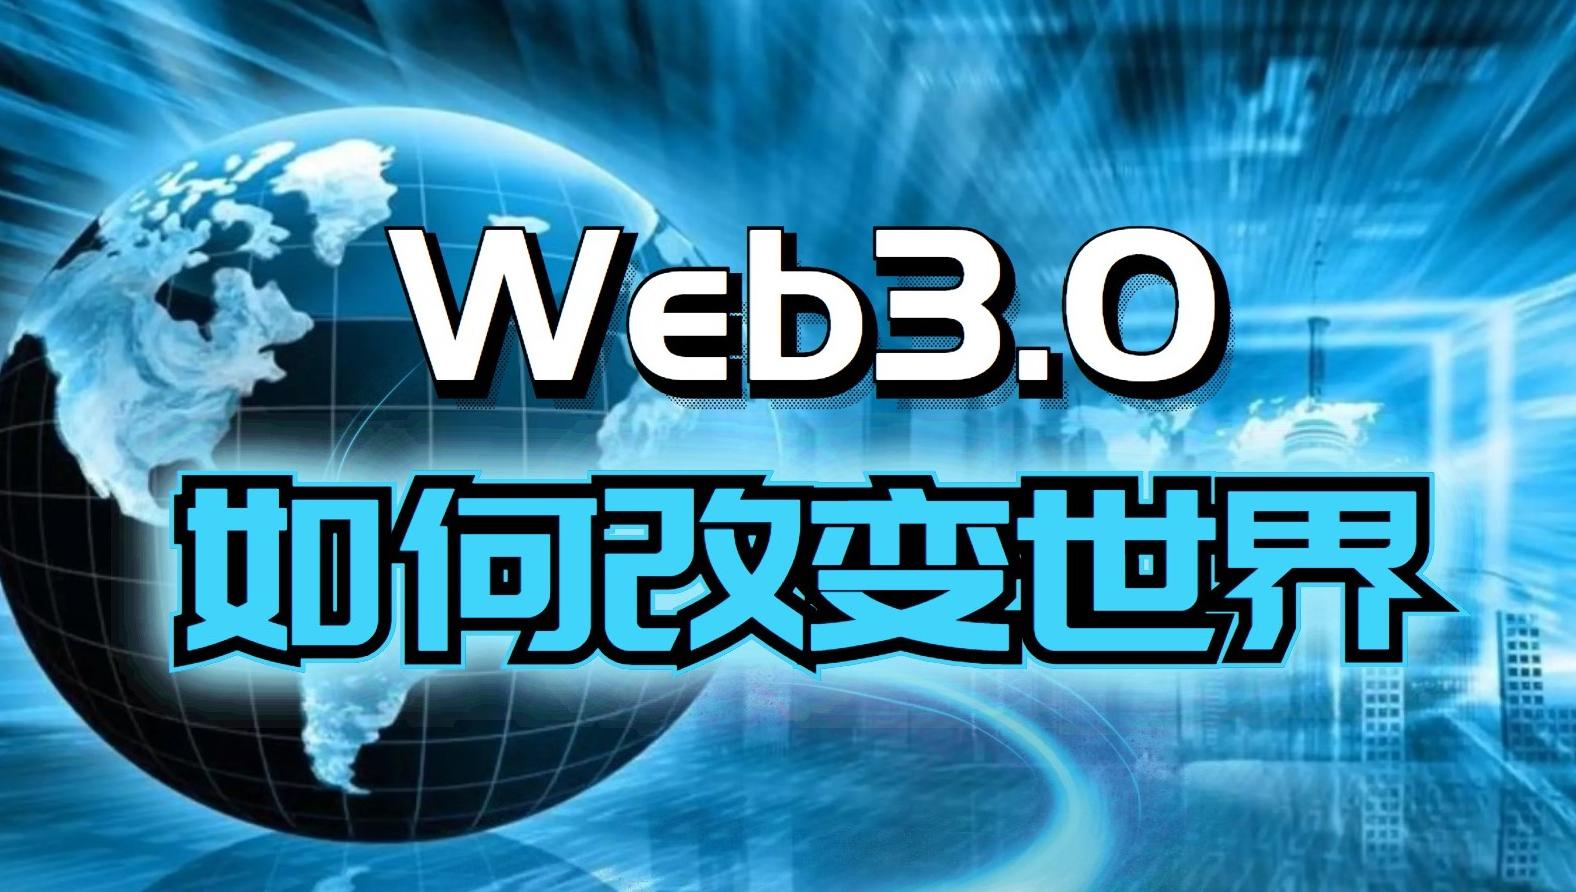 Web2.0向Web3.0过渡已不可逆转，新时代会是怎样的？